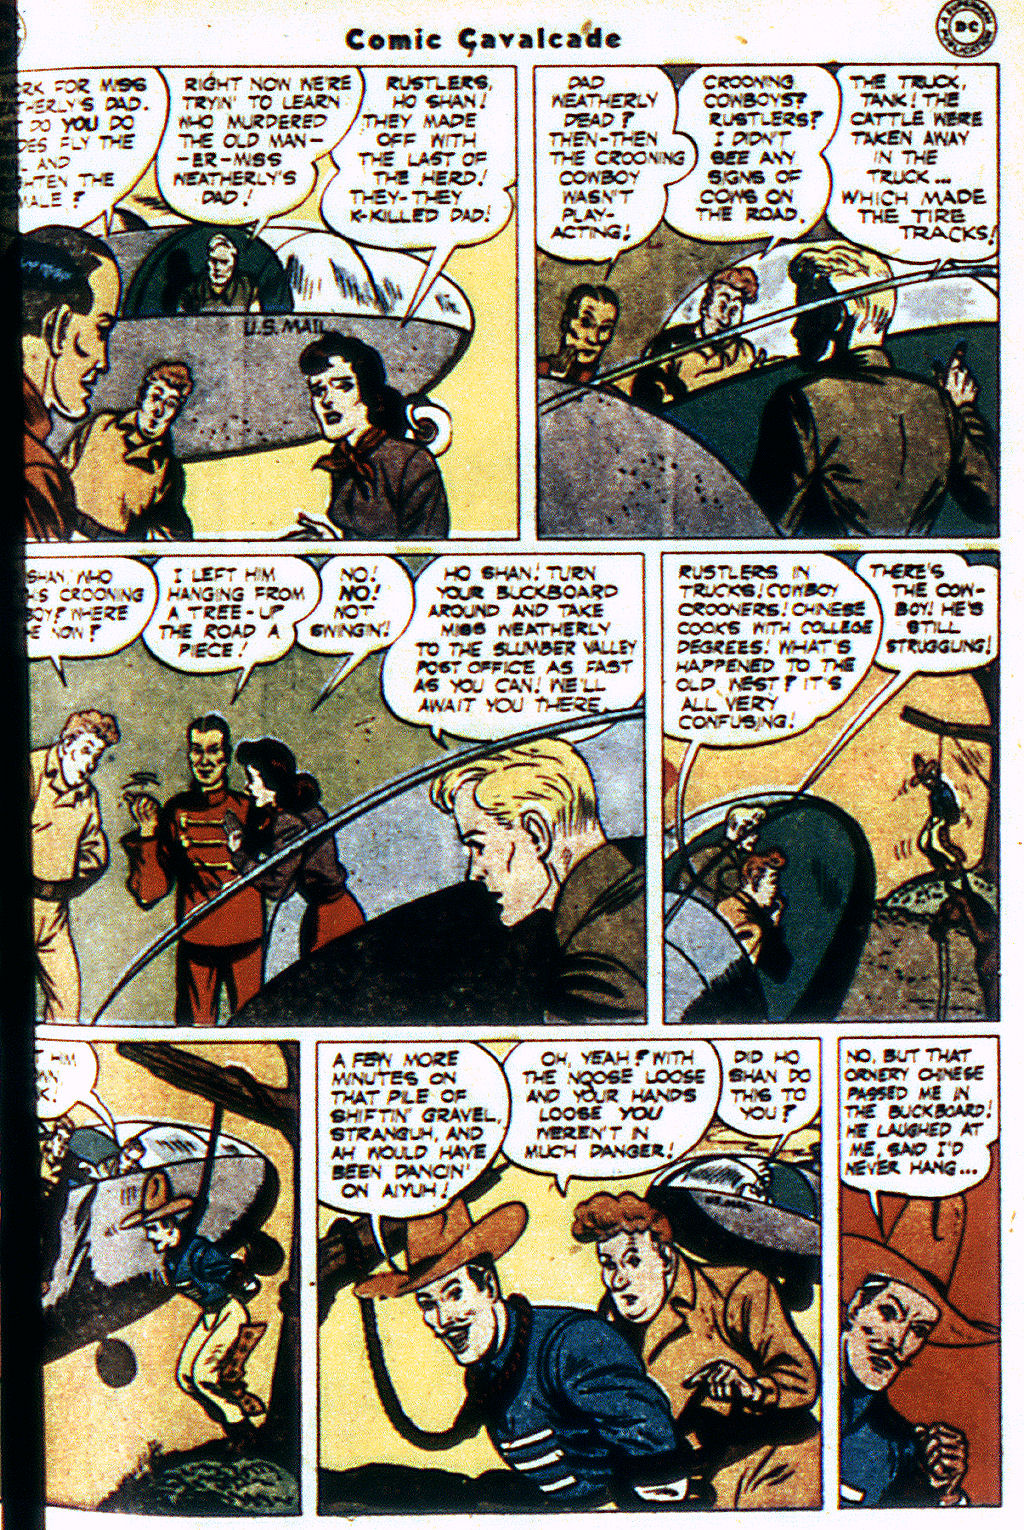 Comic Cavalcade issue 18 - Page 54